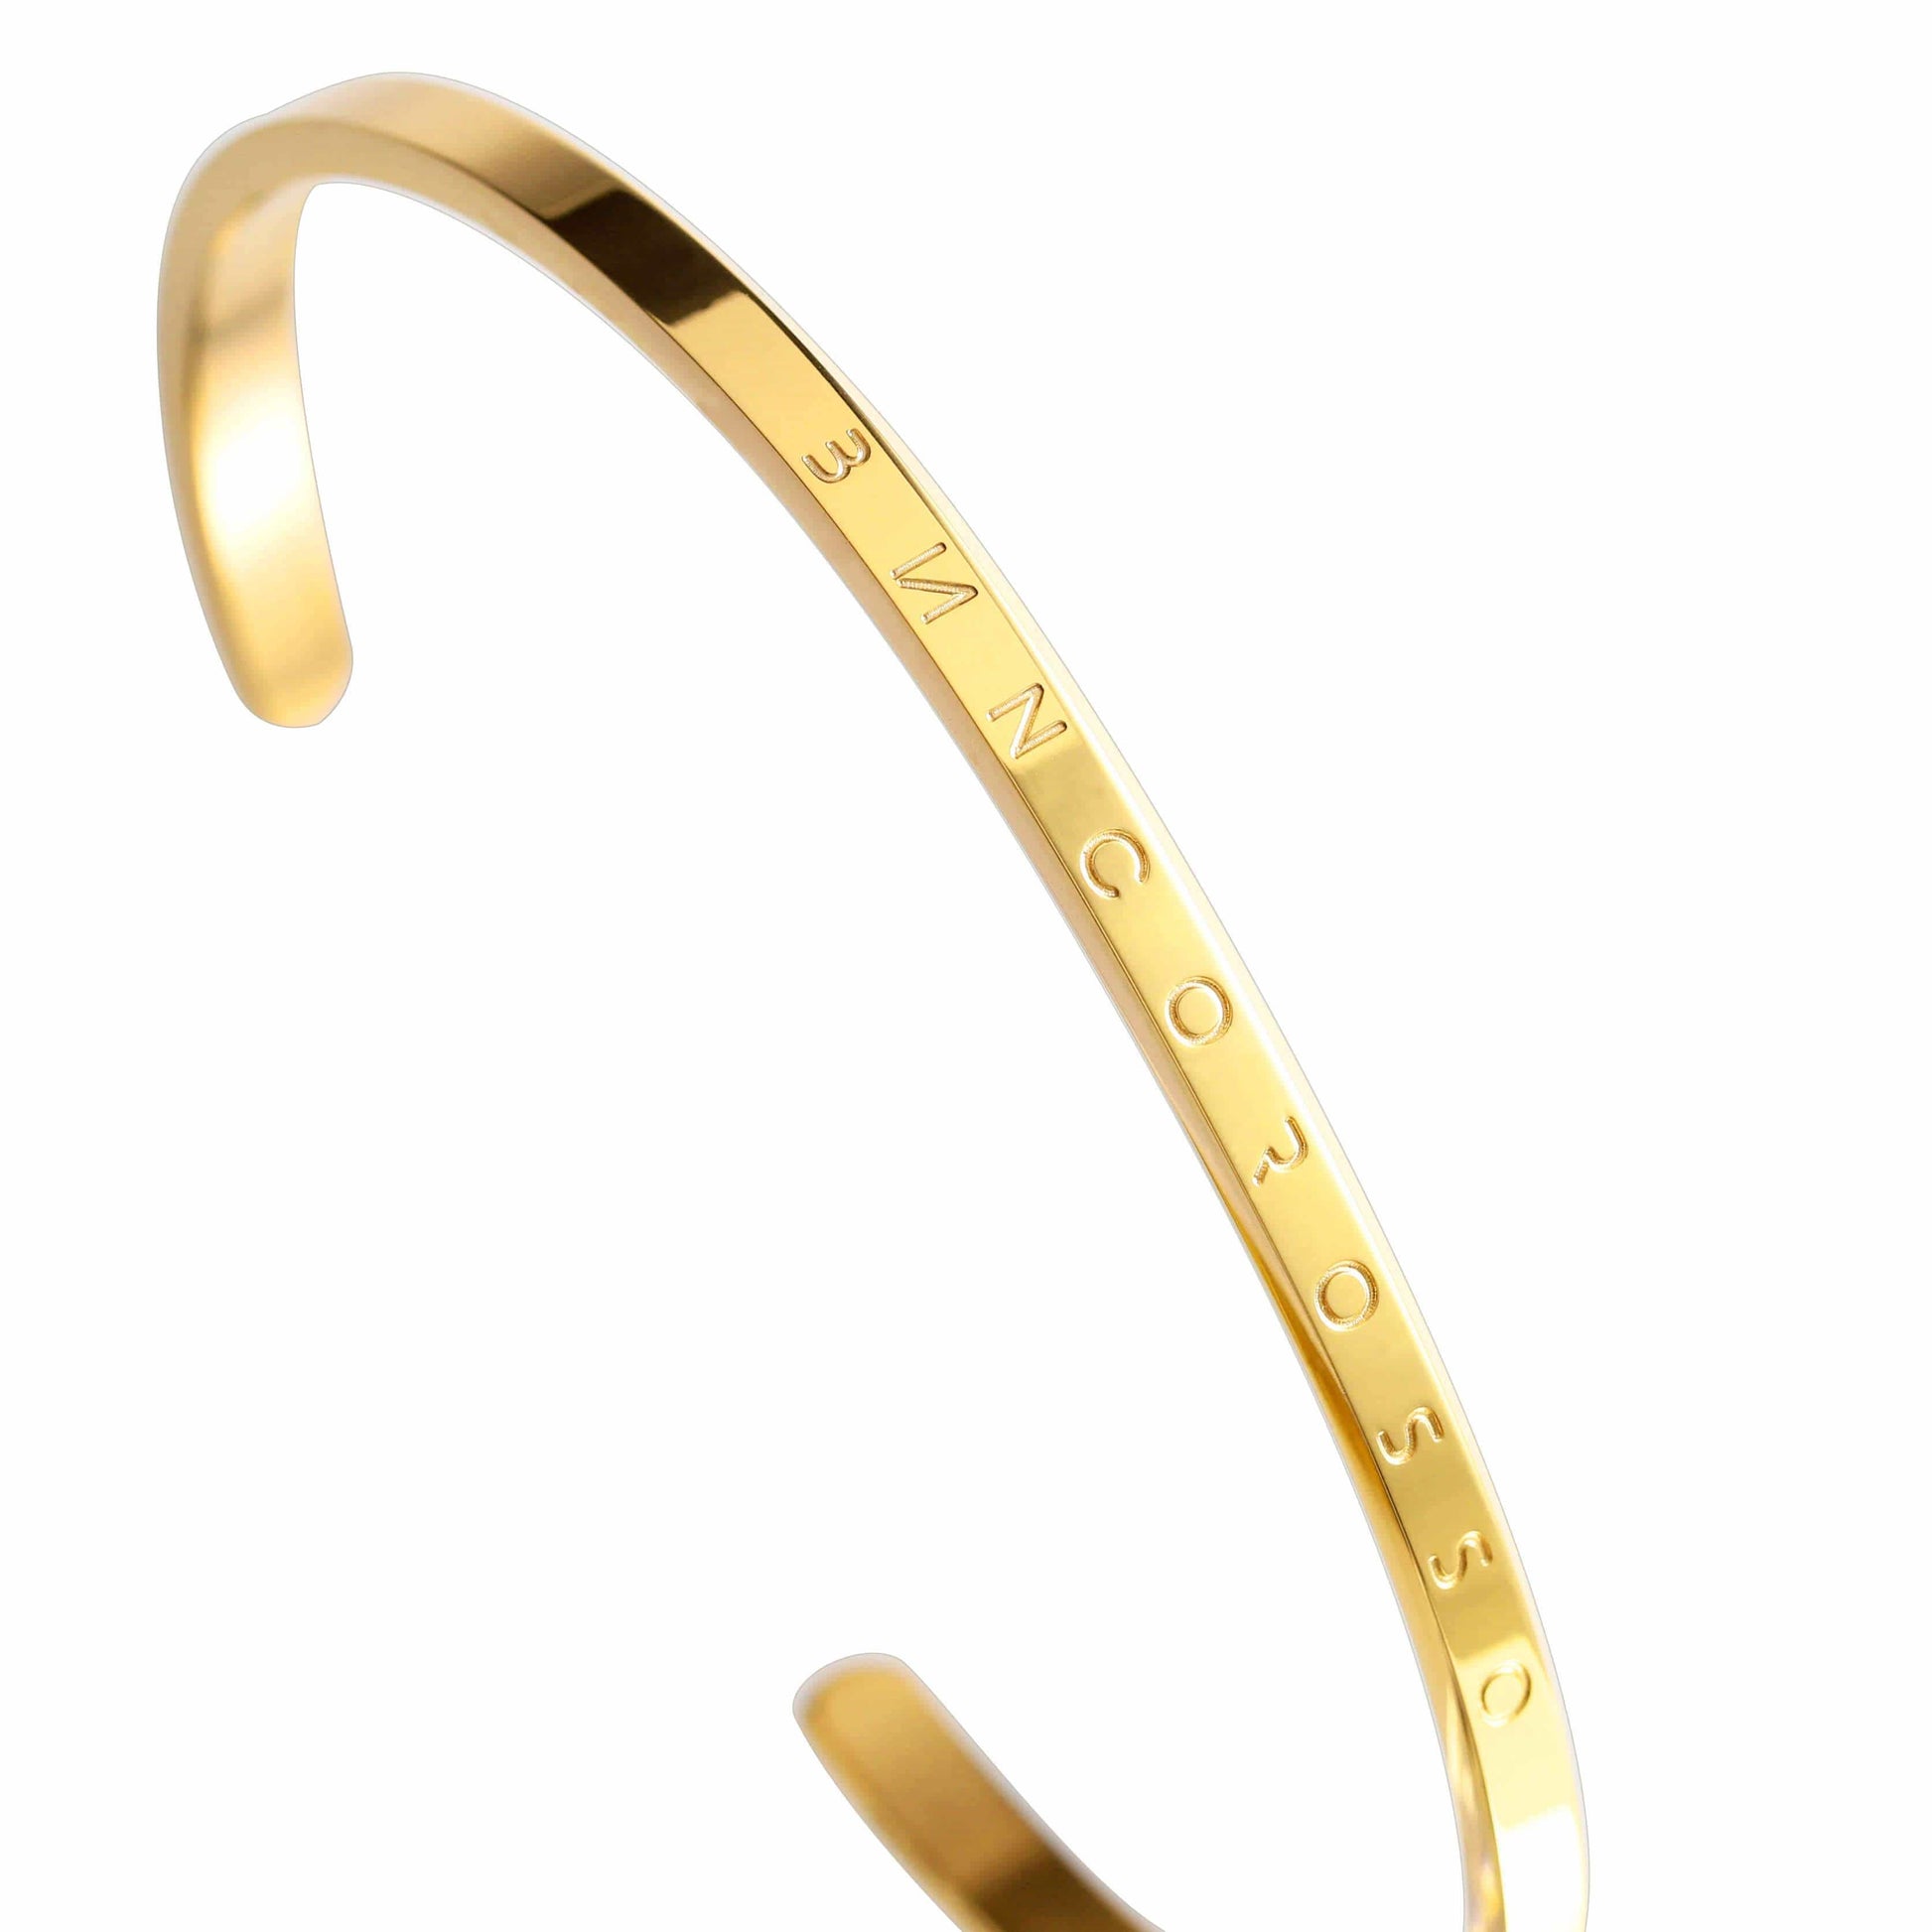 Bianco Rosso Watches Bracelet Classic Gold Bracelet rologia cyprus greece